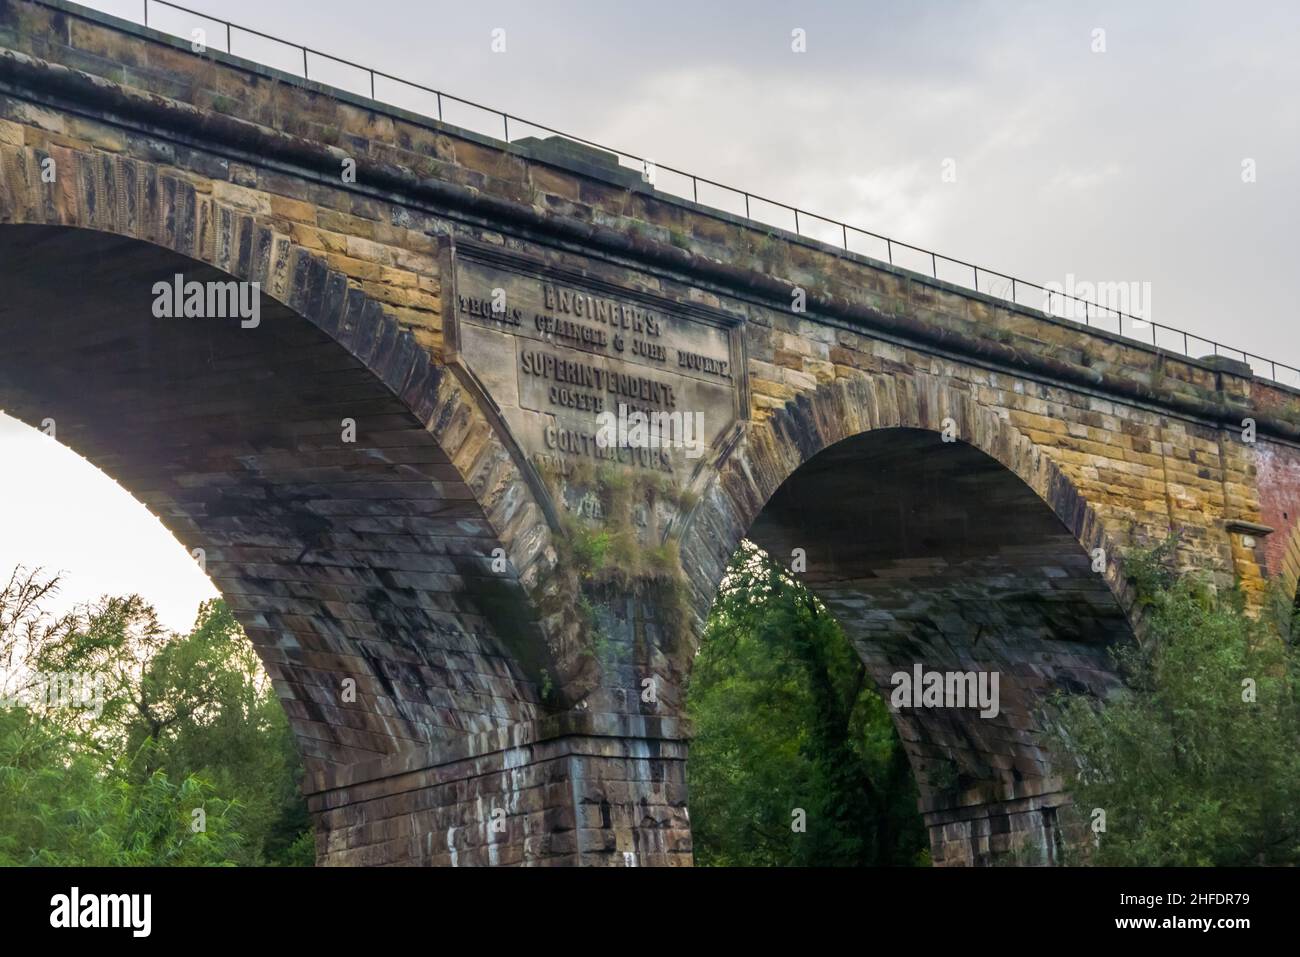 Historic Stone Inscription on Yarm Railway Viaduct (Grade 2 listed) - Reading Engineers: Thomas Grainger & John Bourne, Superintendent: Joseph Dixon Stock Photo